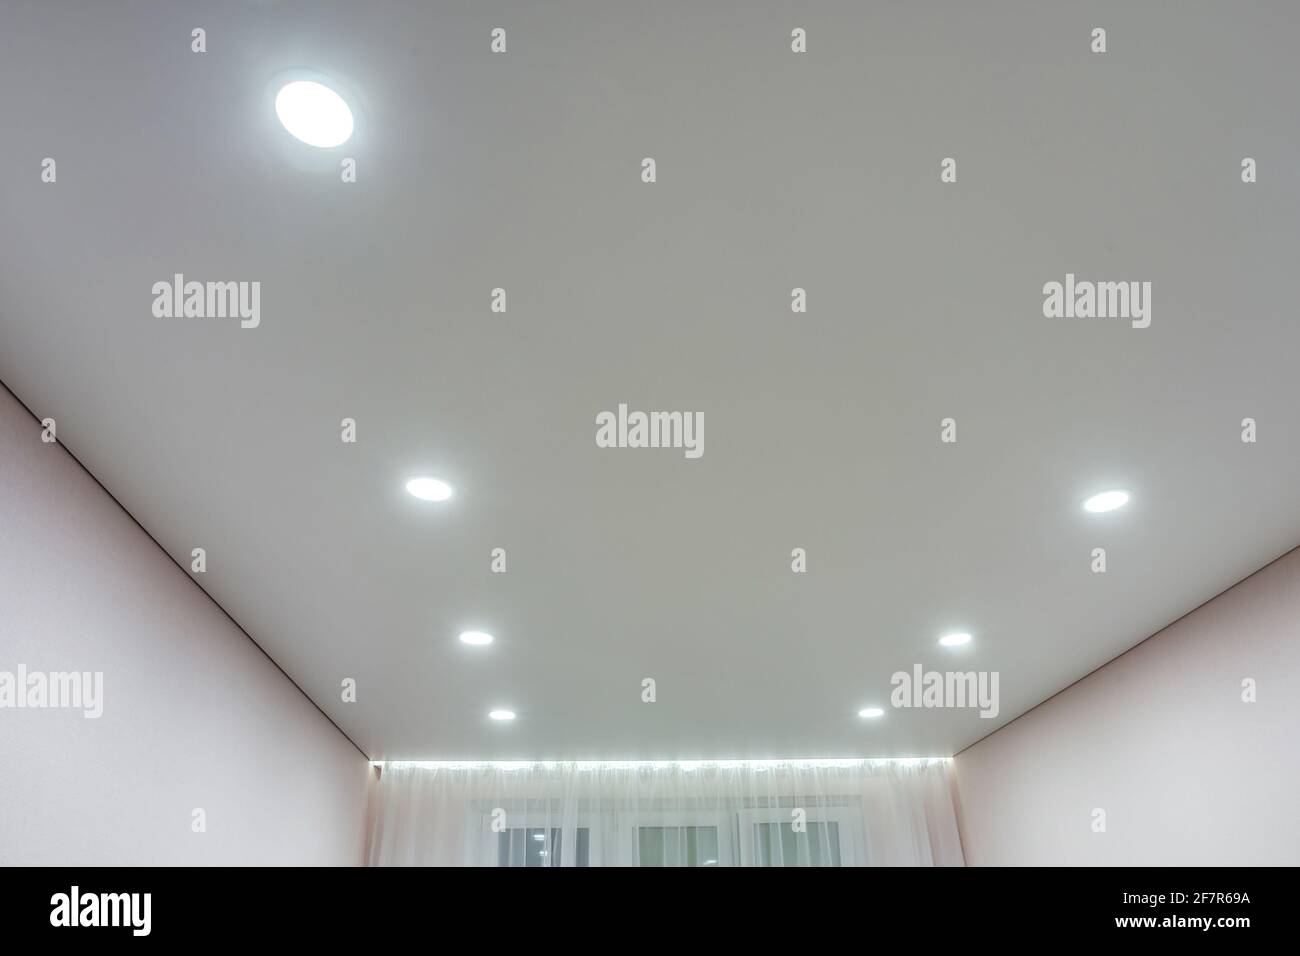 Techo de iluminación led fotografías e imágenes de alta resolución - Alamy